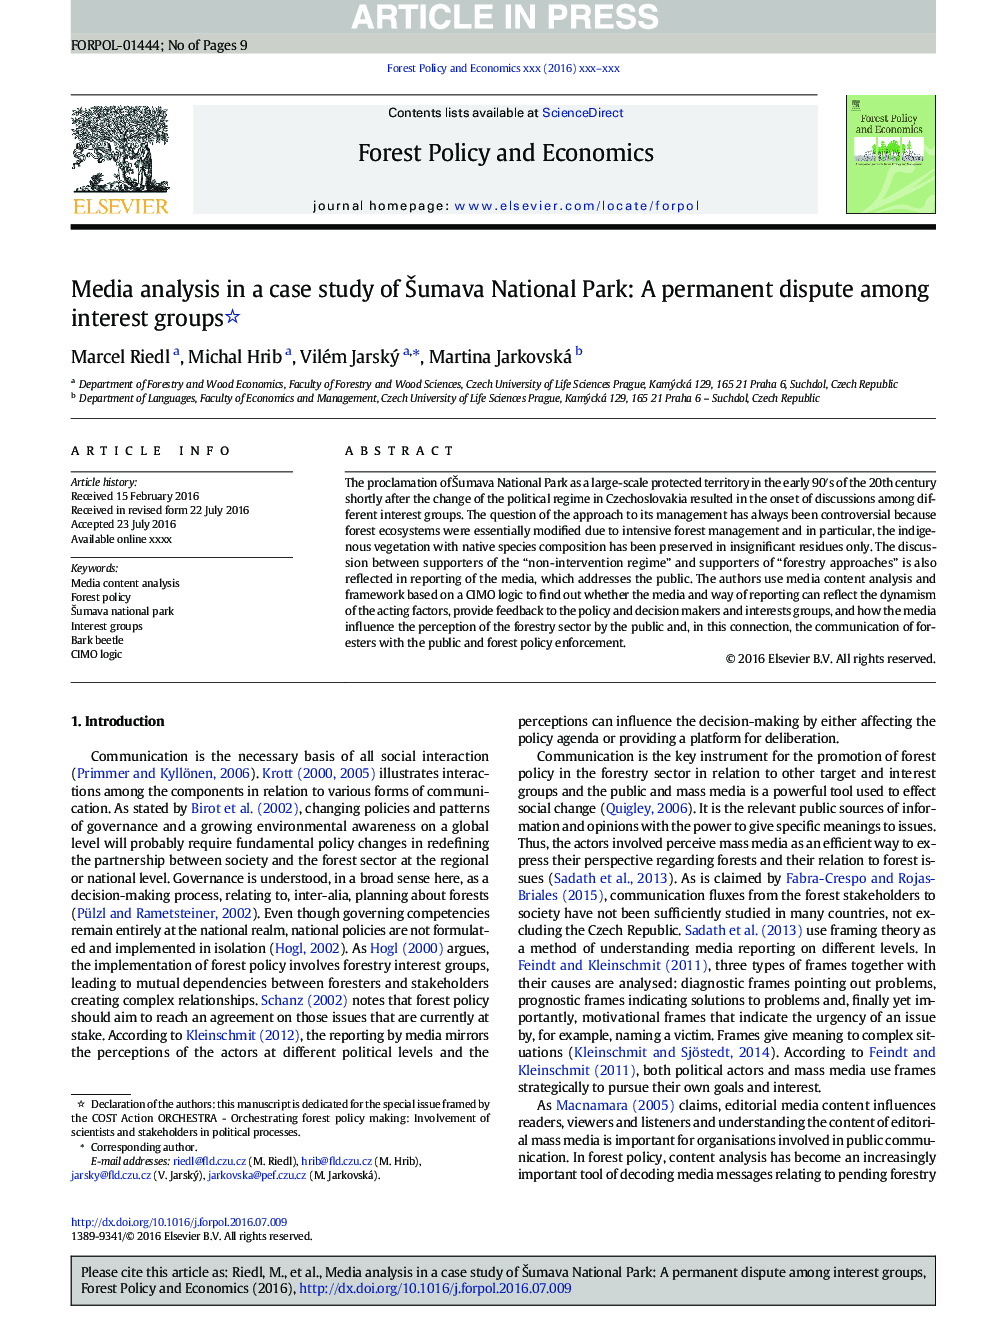 Media analysis in a case study of Å umava National Park: A permanent dispute among interest groups